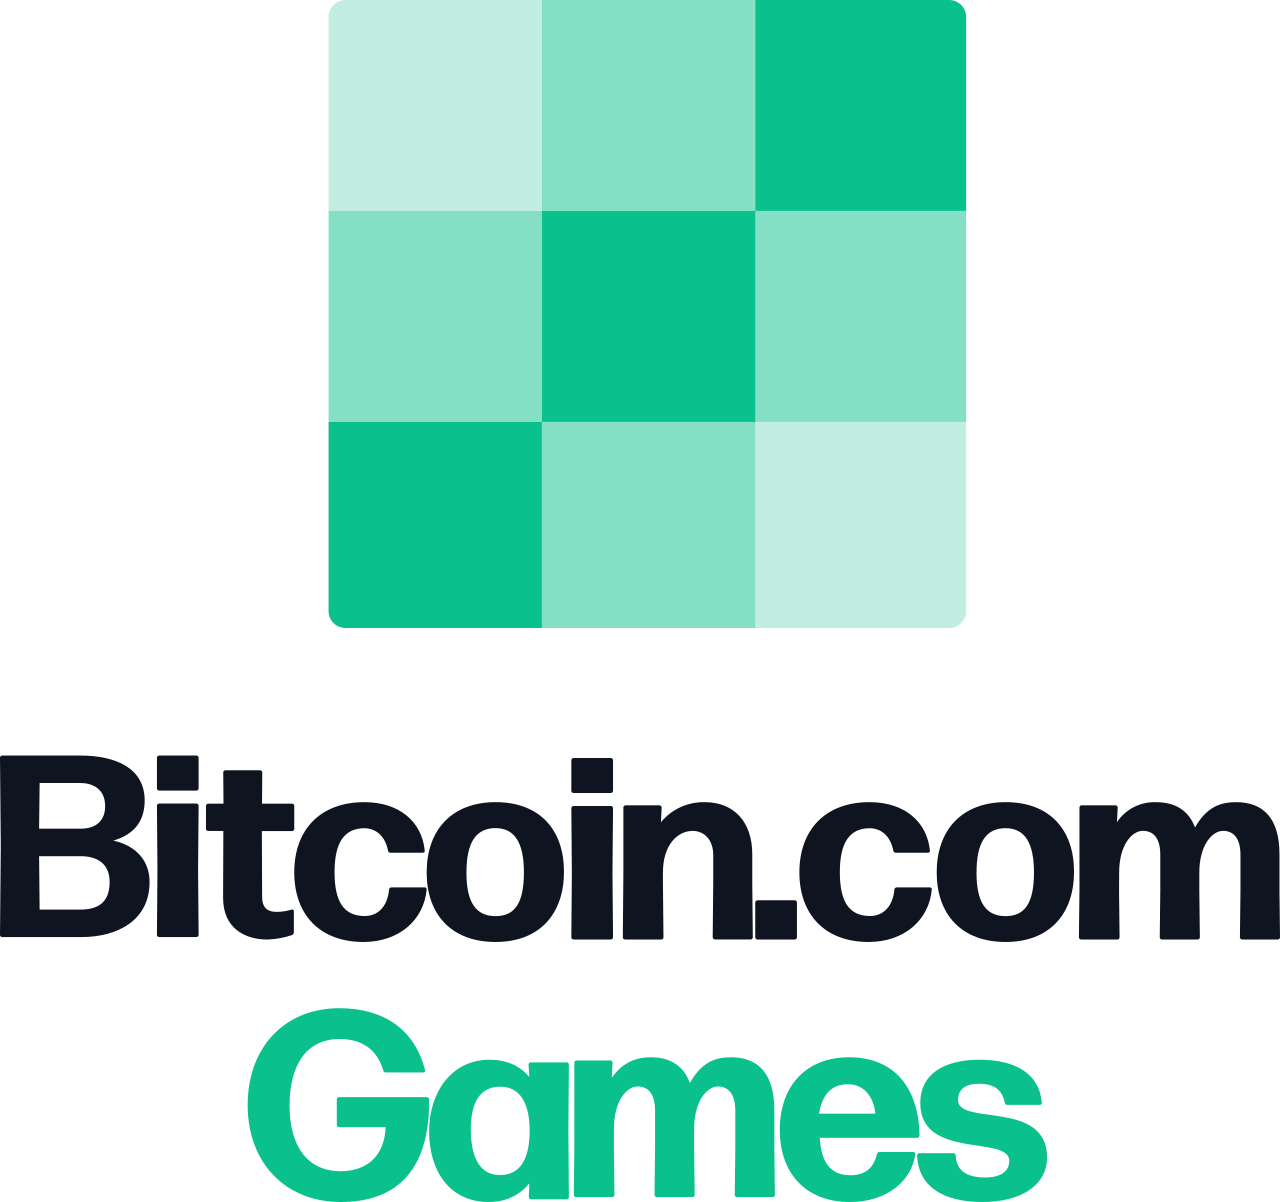 Bitcoin.com Games Logo